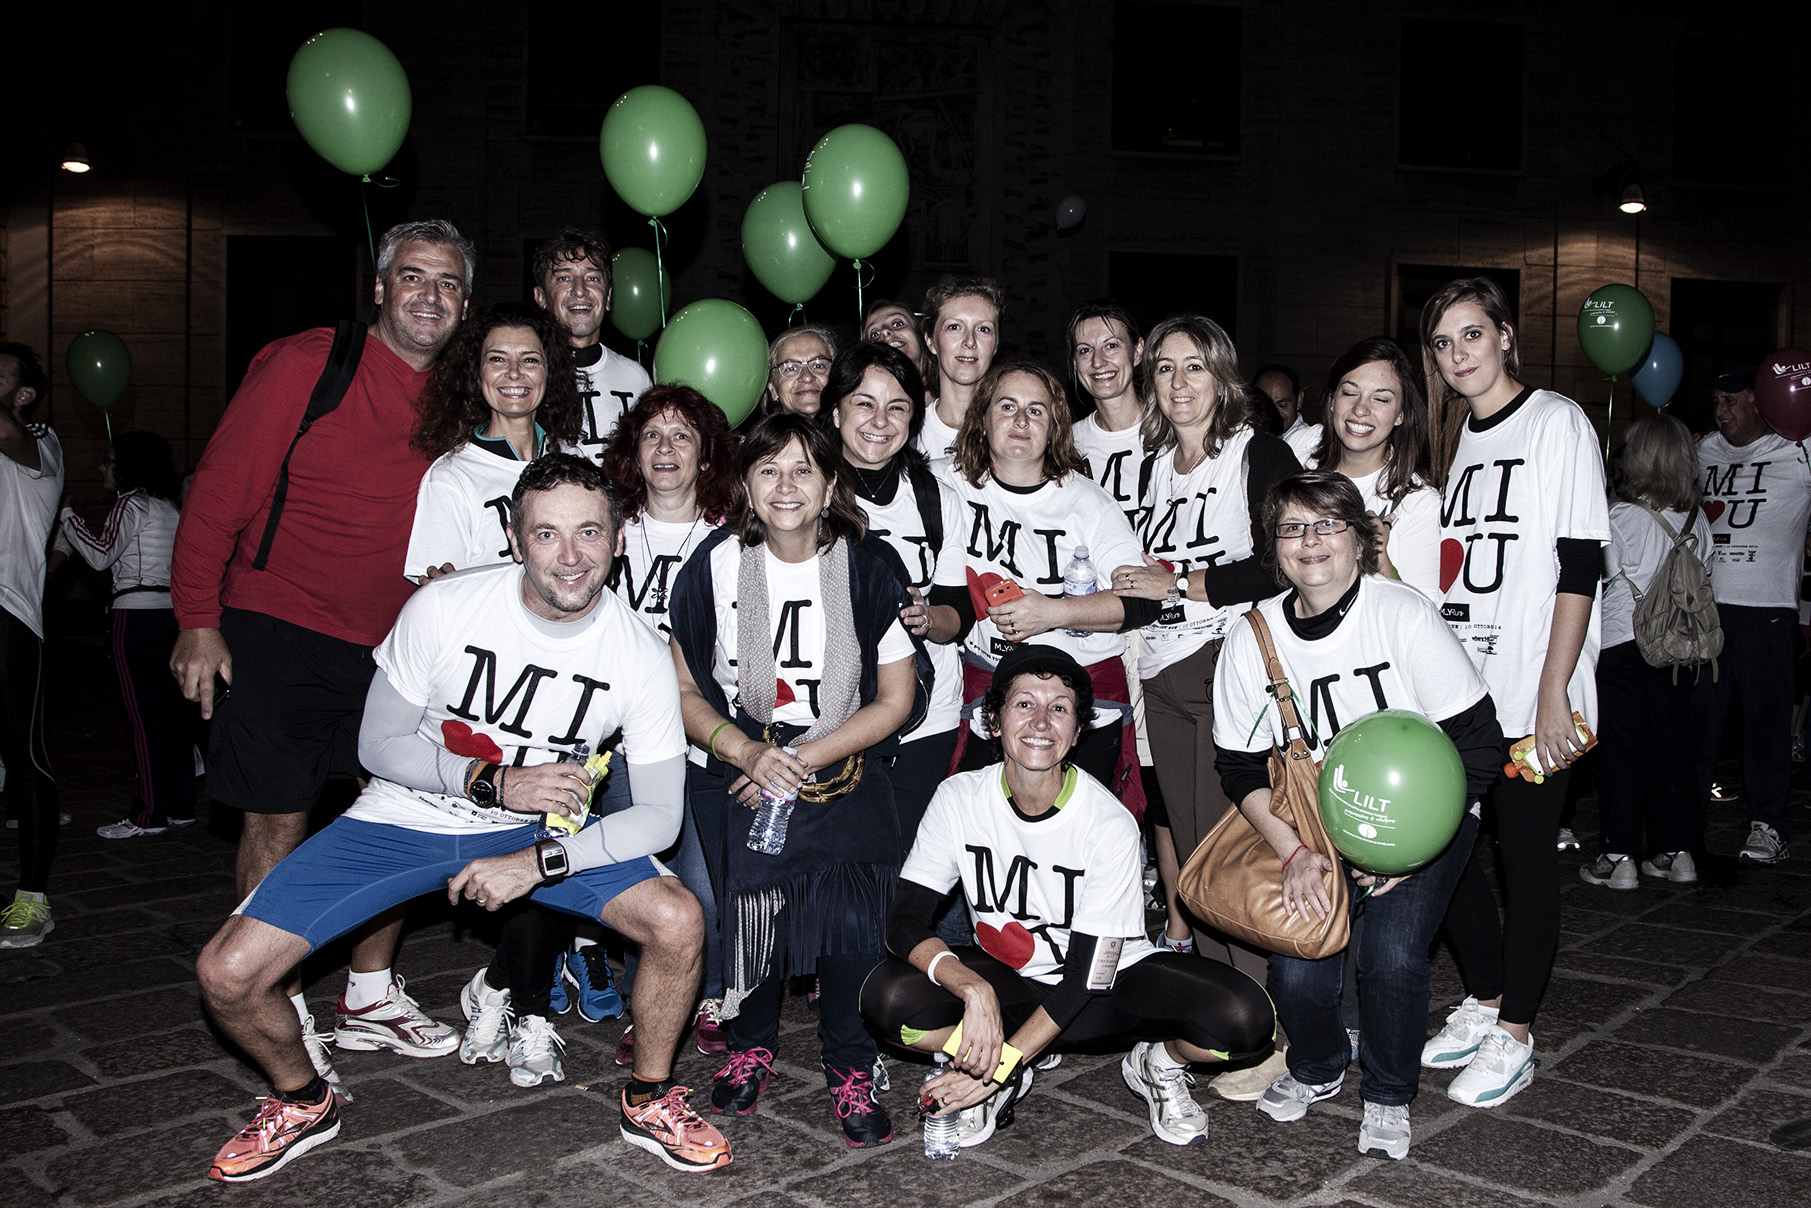 Milano Loves You Run 2015-LILT Milano Monza Brianza